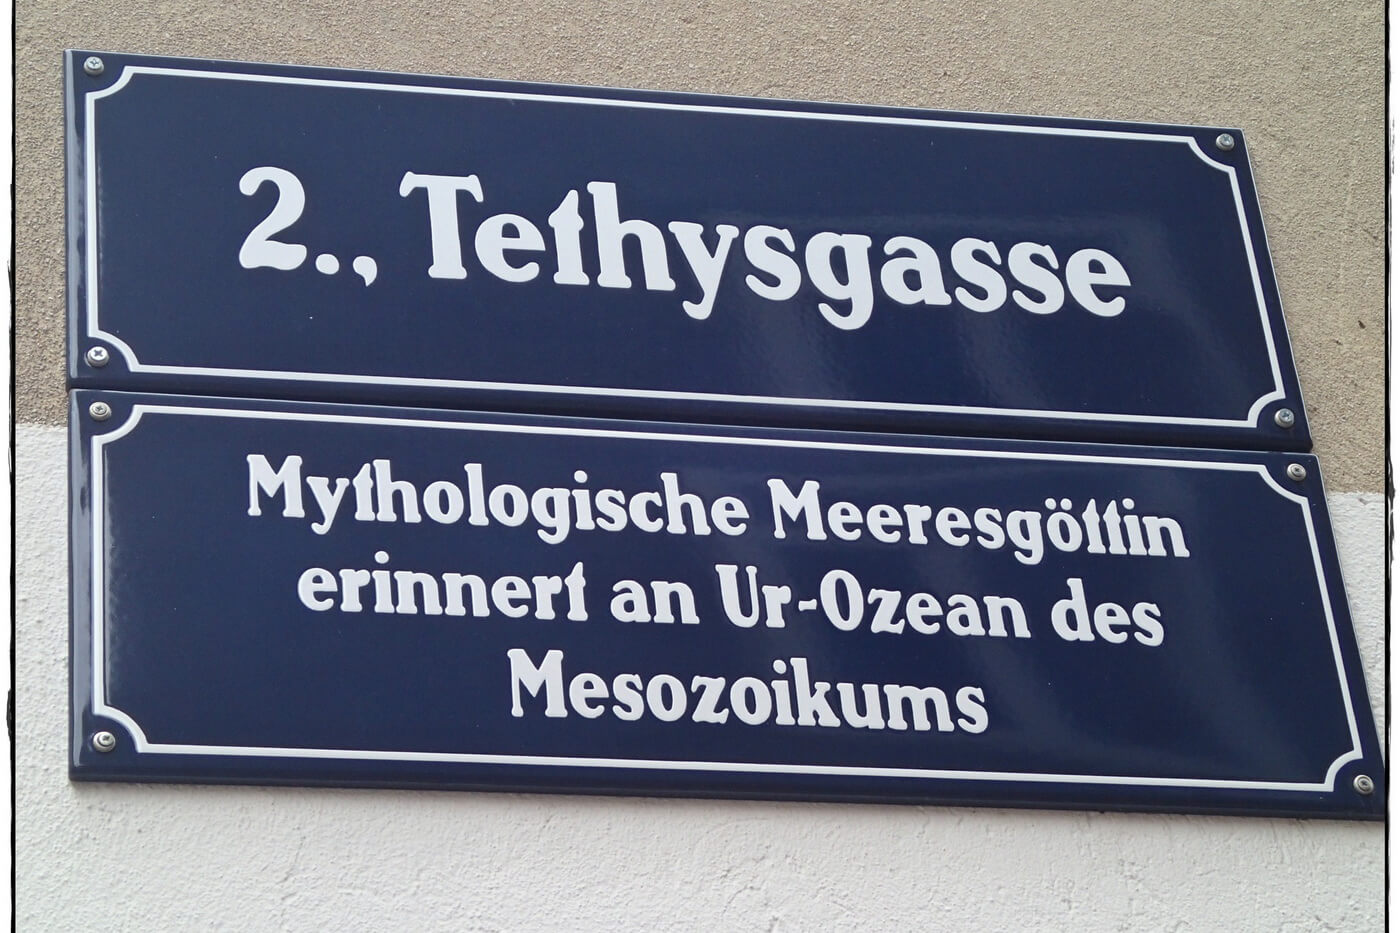 Tethysgasse, Wien